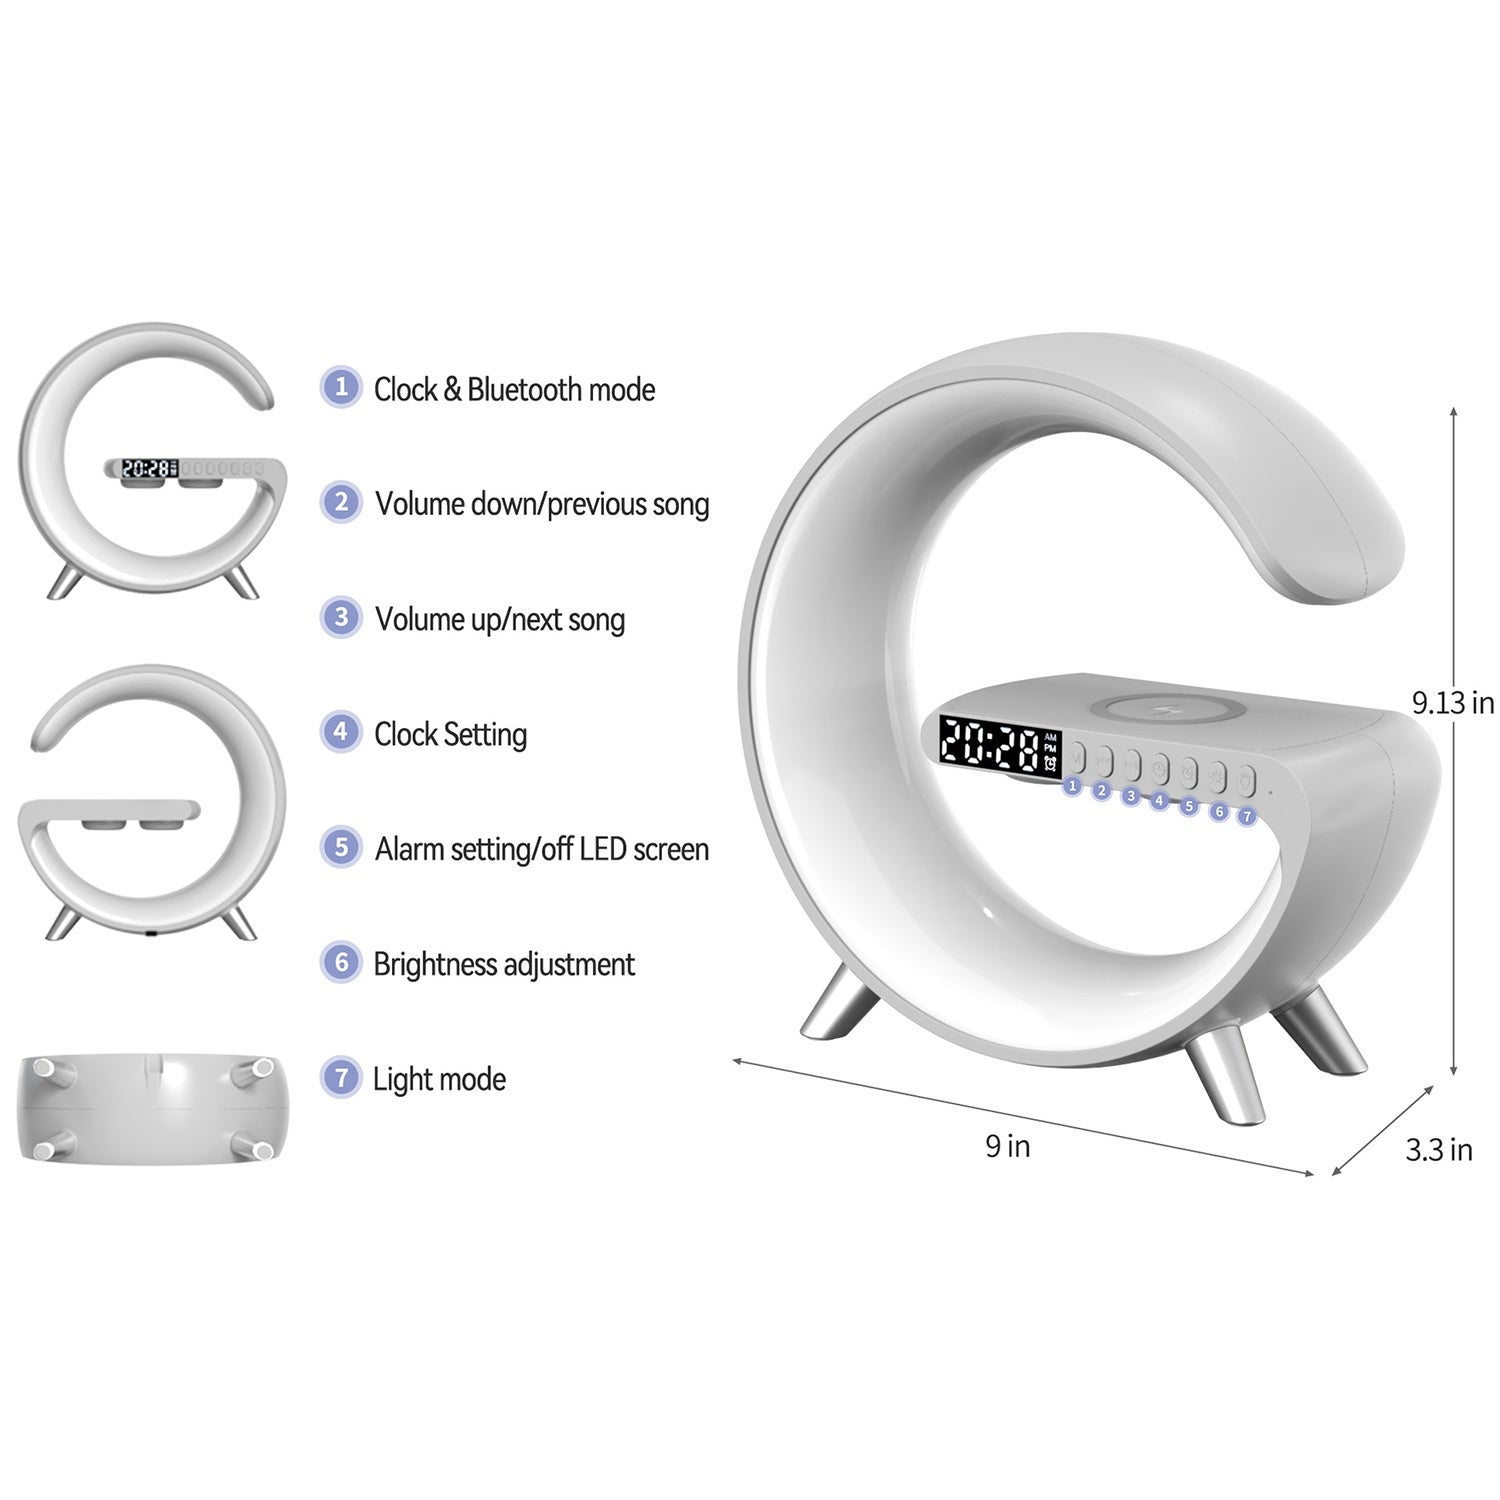 ORIGINAL Multifunctional Alarm Clock Night Light Mobile phone Wireless Charging Bluetooth Speaker Smart APP Control